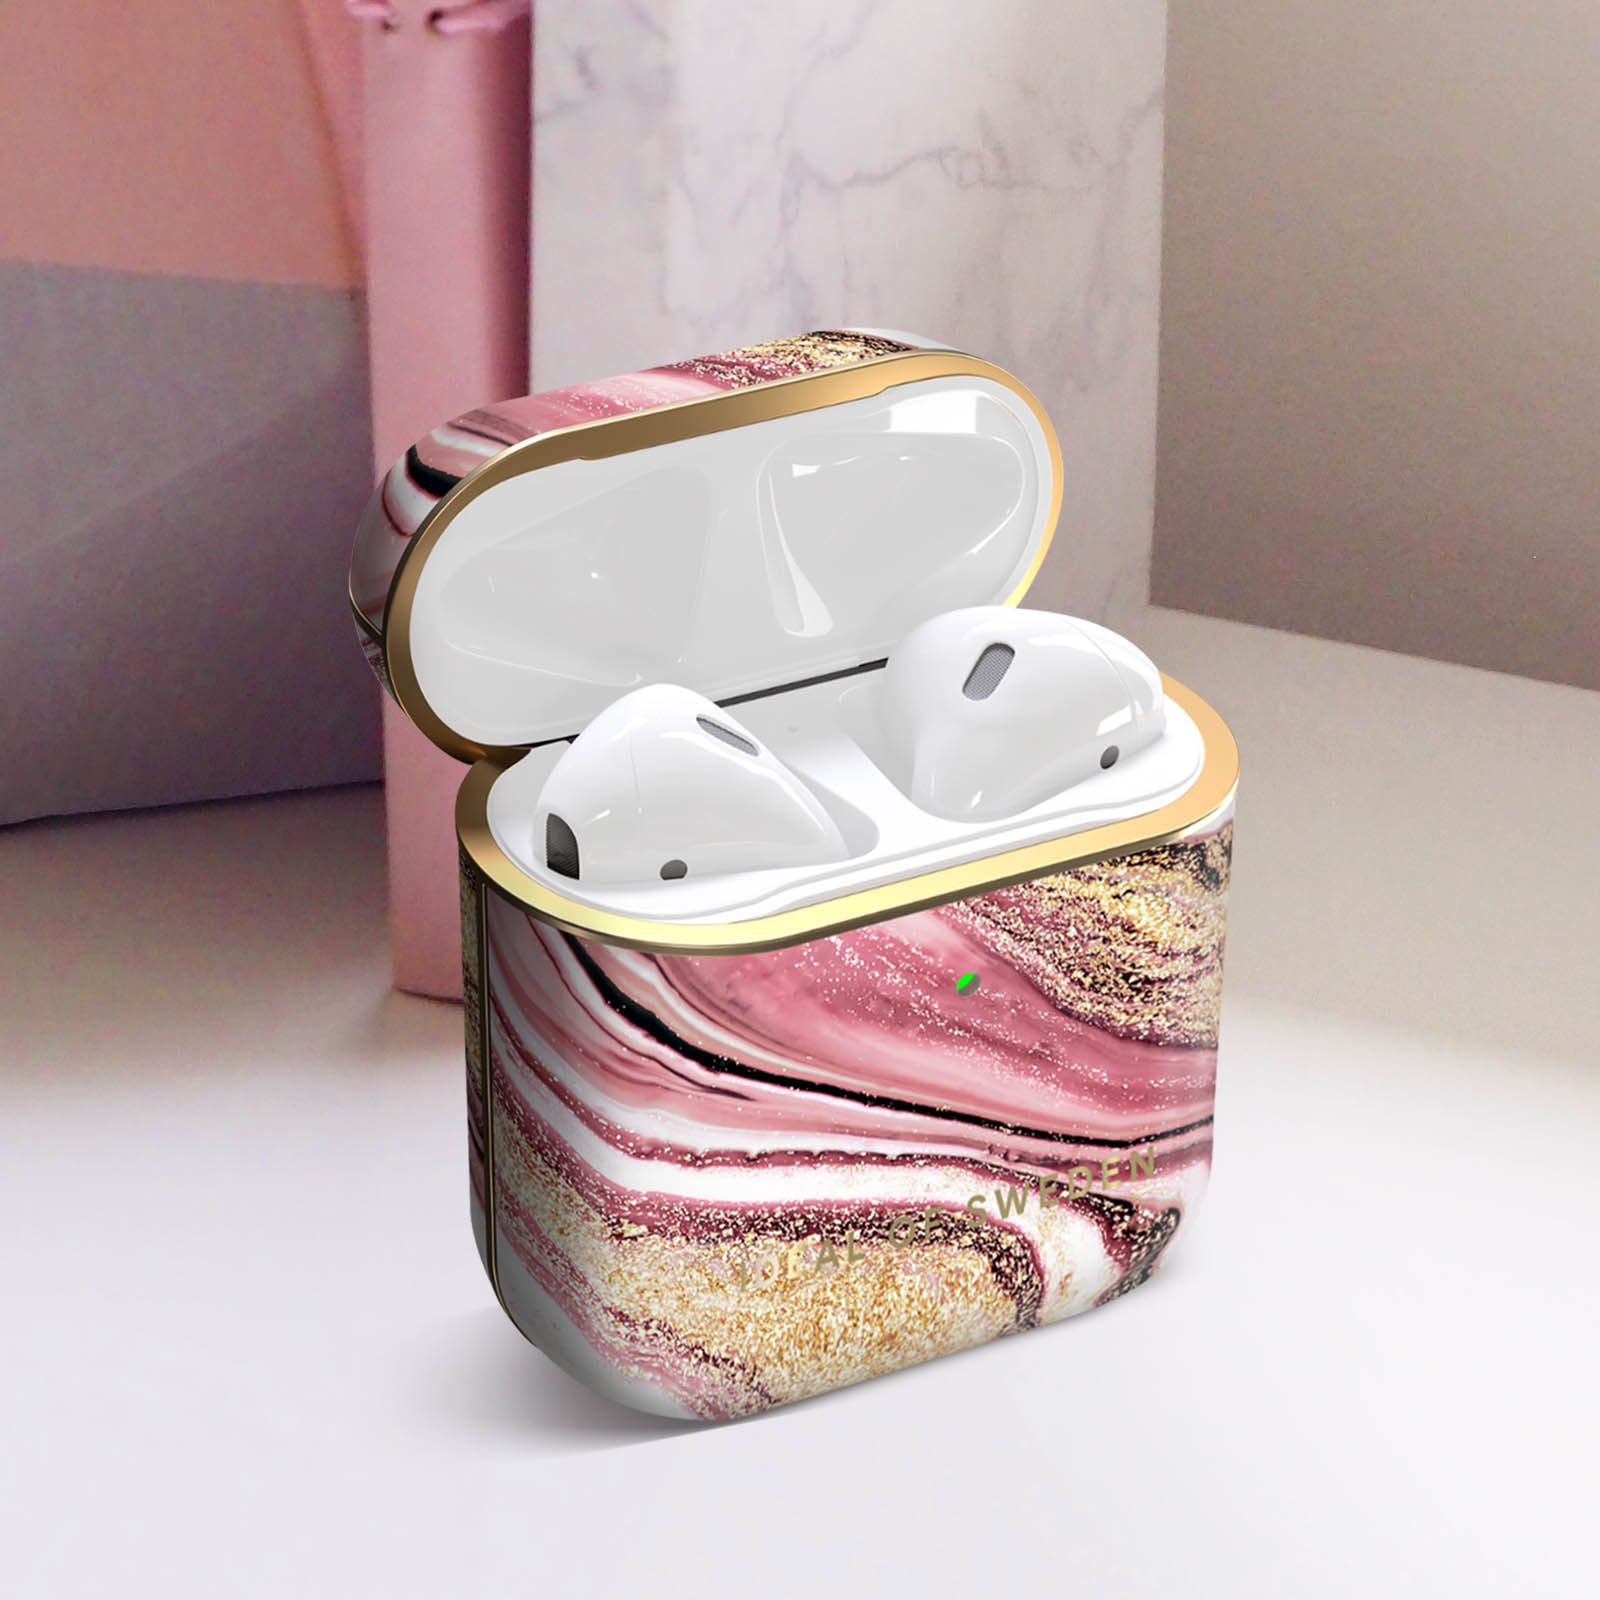 IDEAL OF SWEDEN IDFAPC-193 für: Swirl Cover Pink passend AirPod Apple Case Cosmic Full